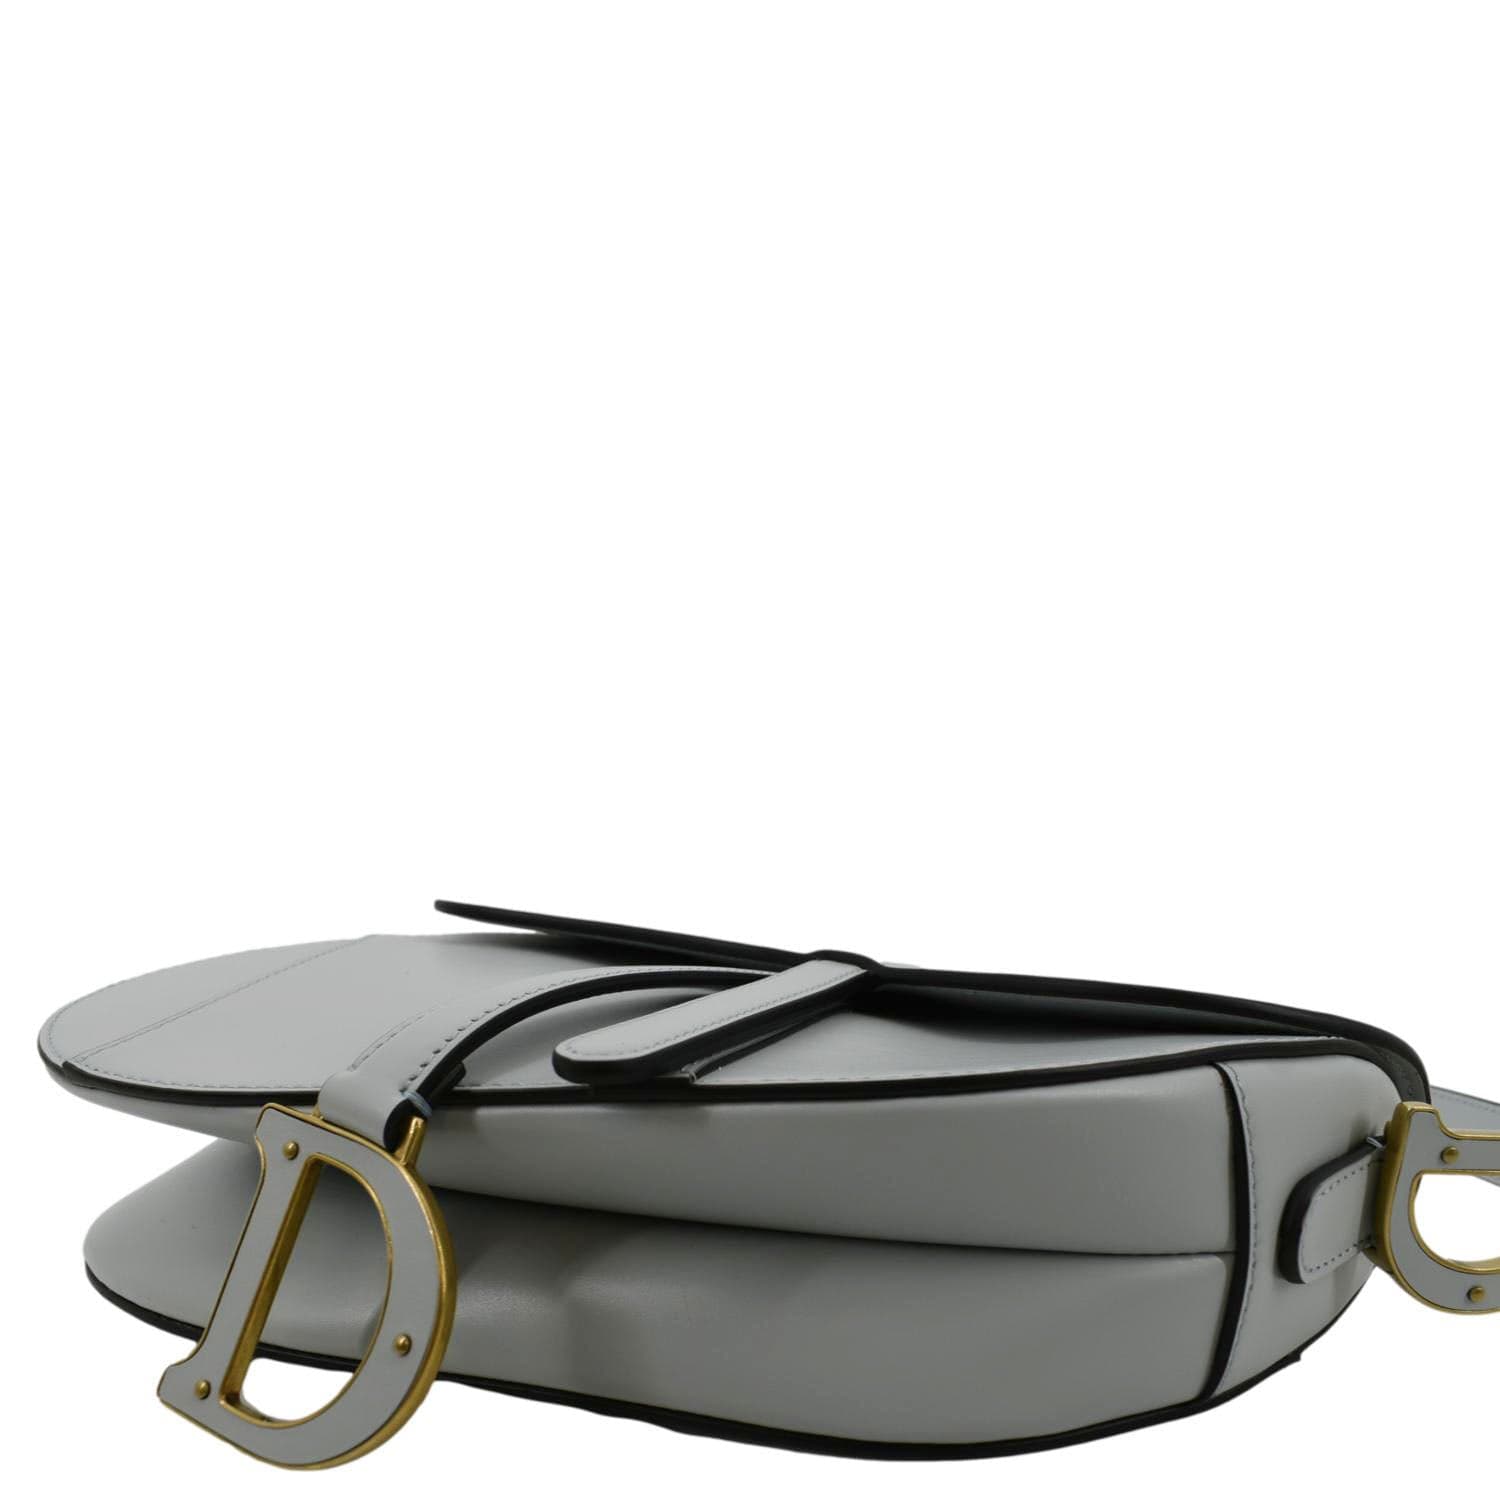 Dior Saddle Handbag 389713  palazzo s shoulder bag furla bag